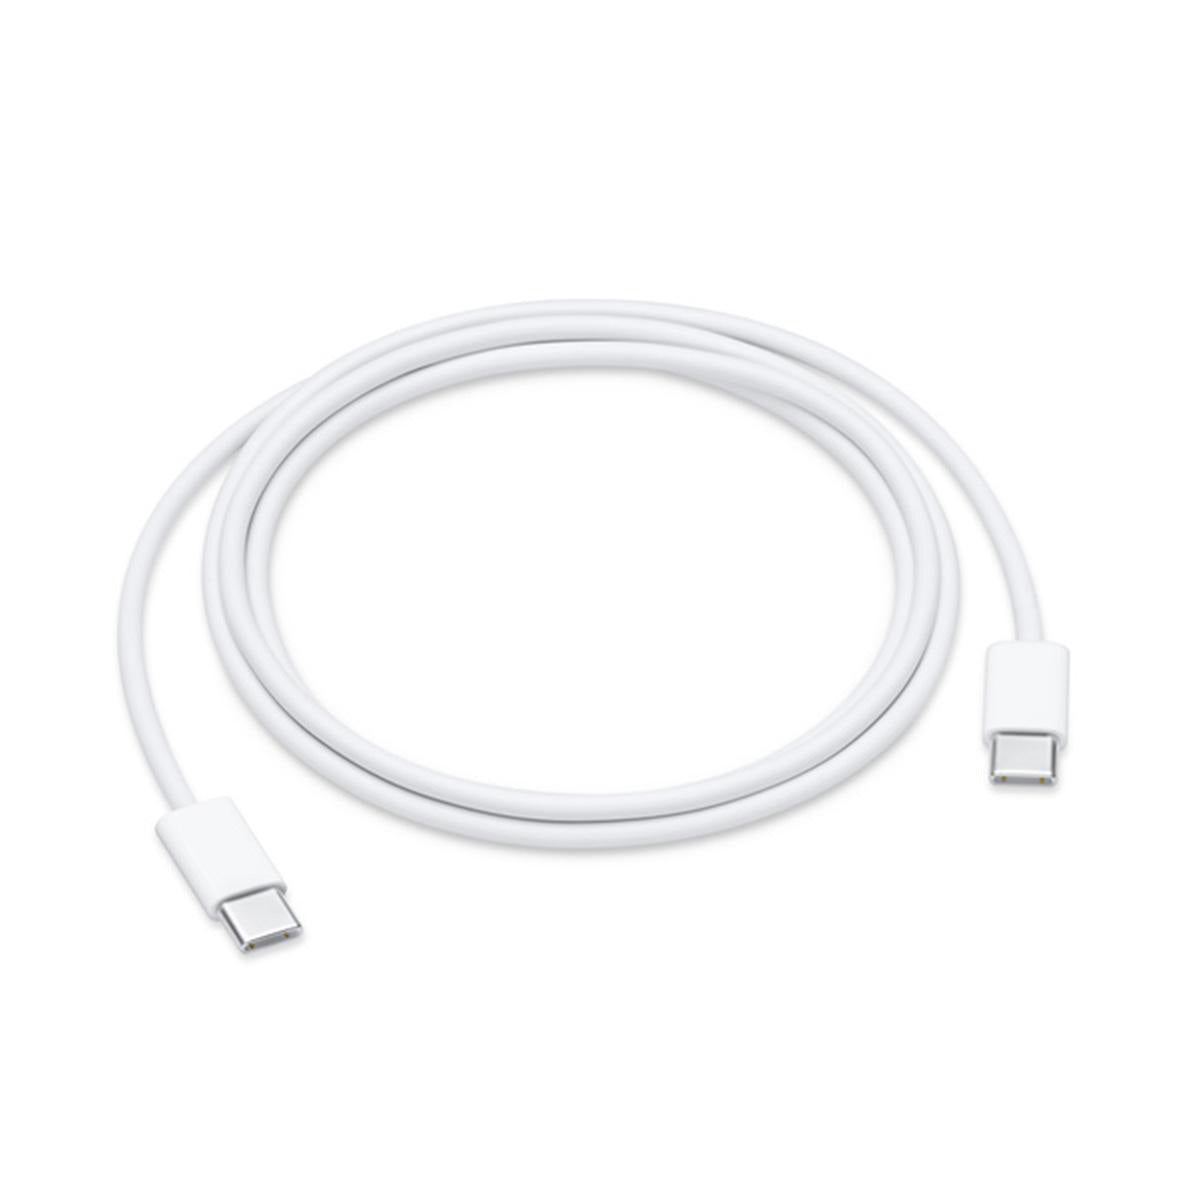 Apple Original USB-C Charge Cable (2M)